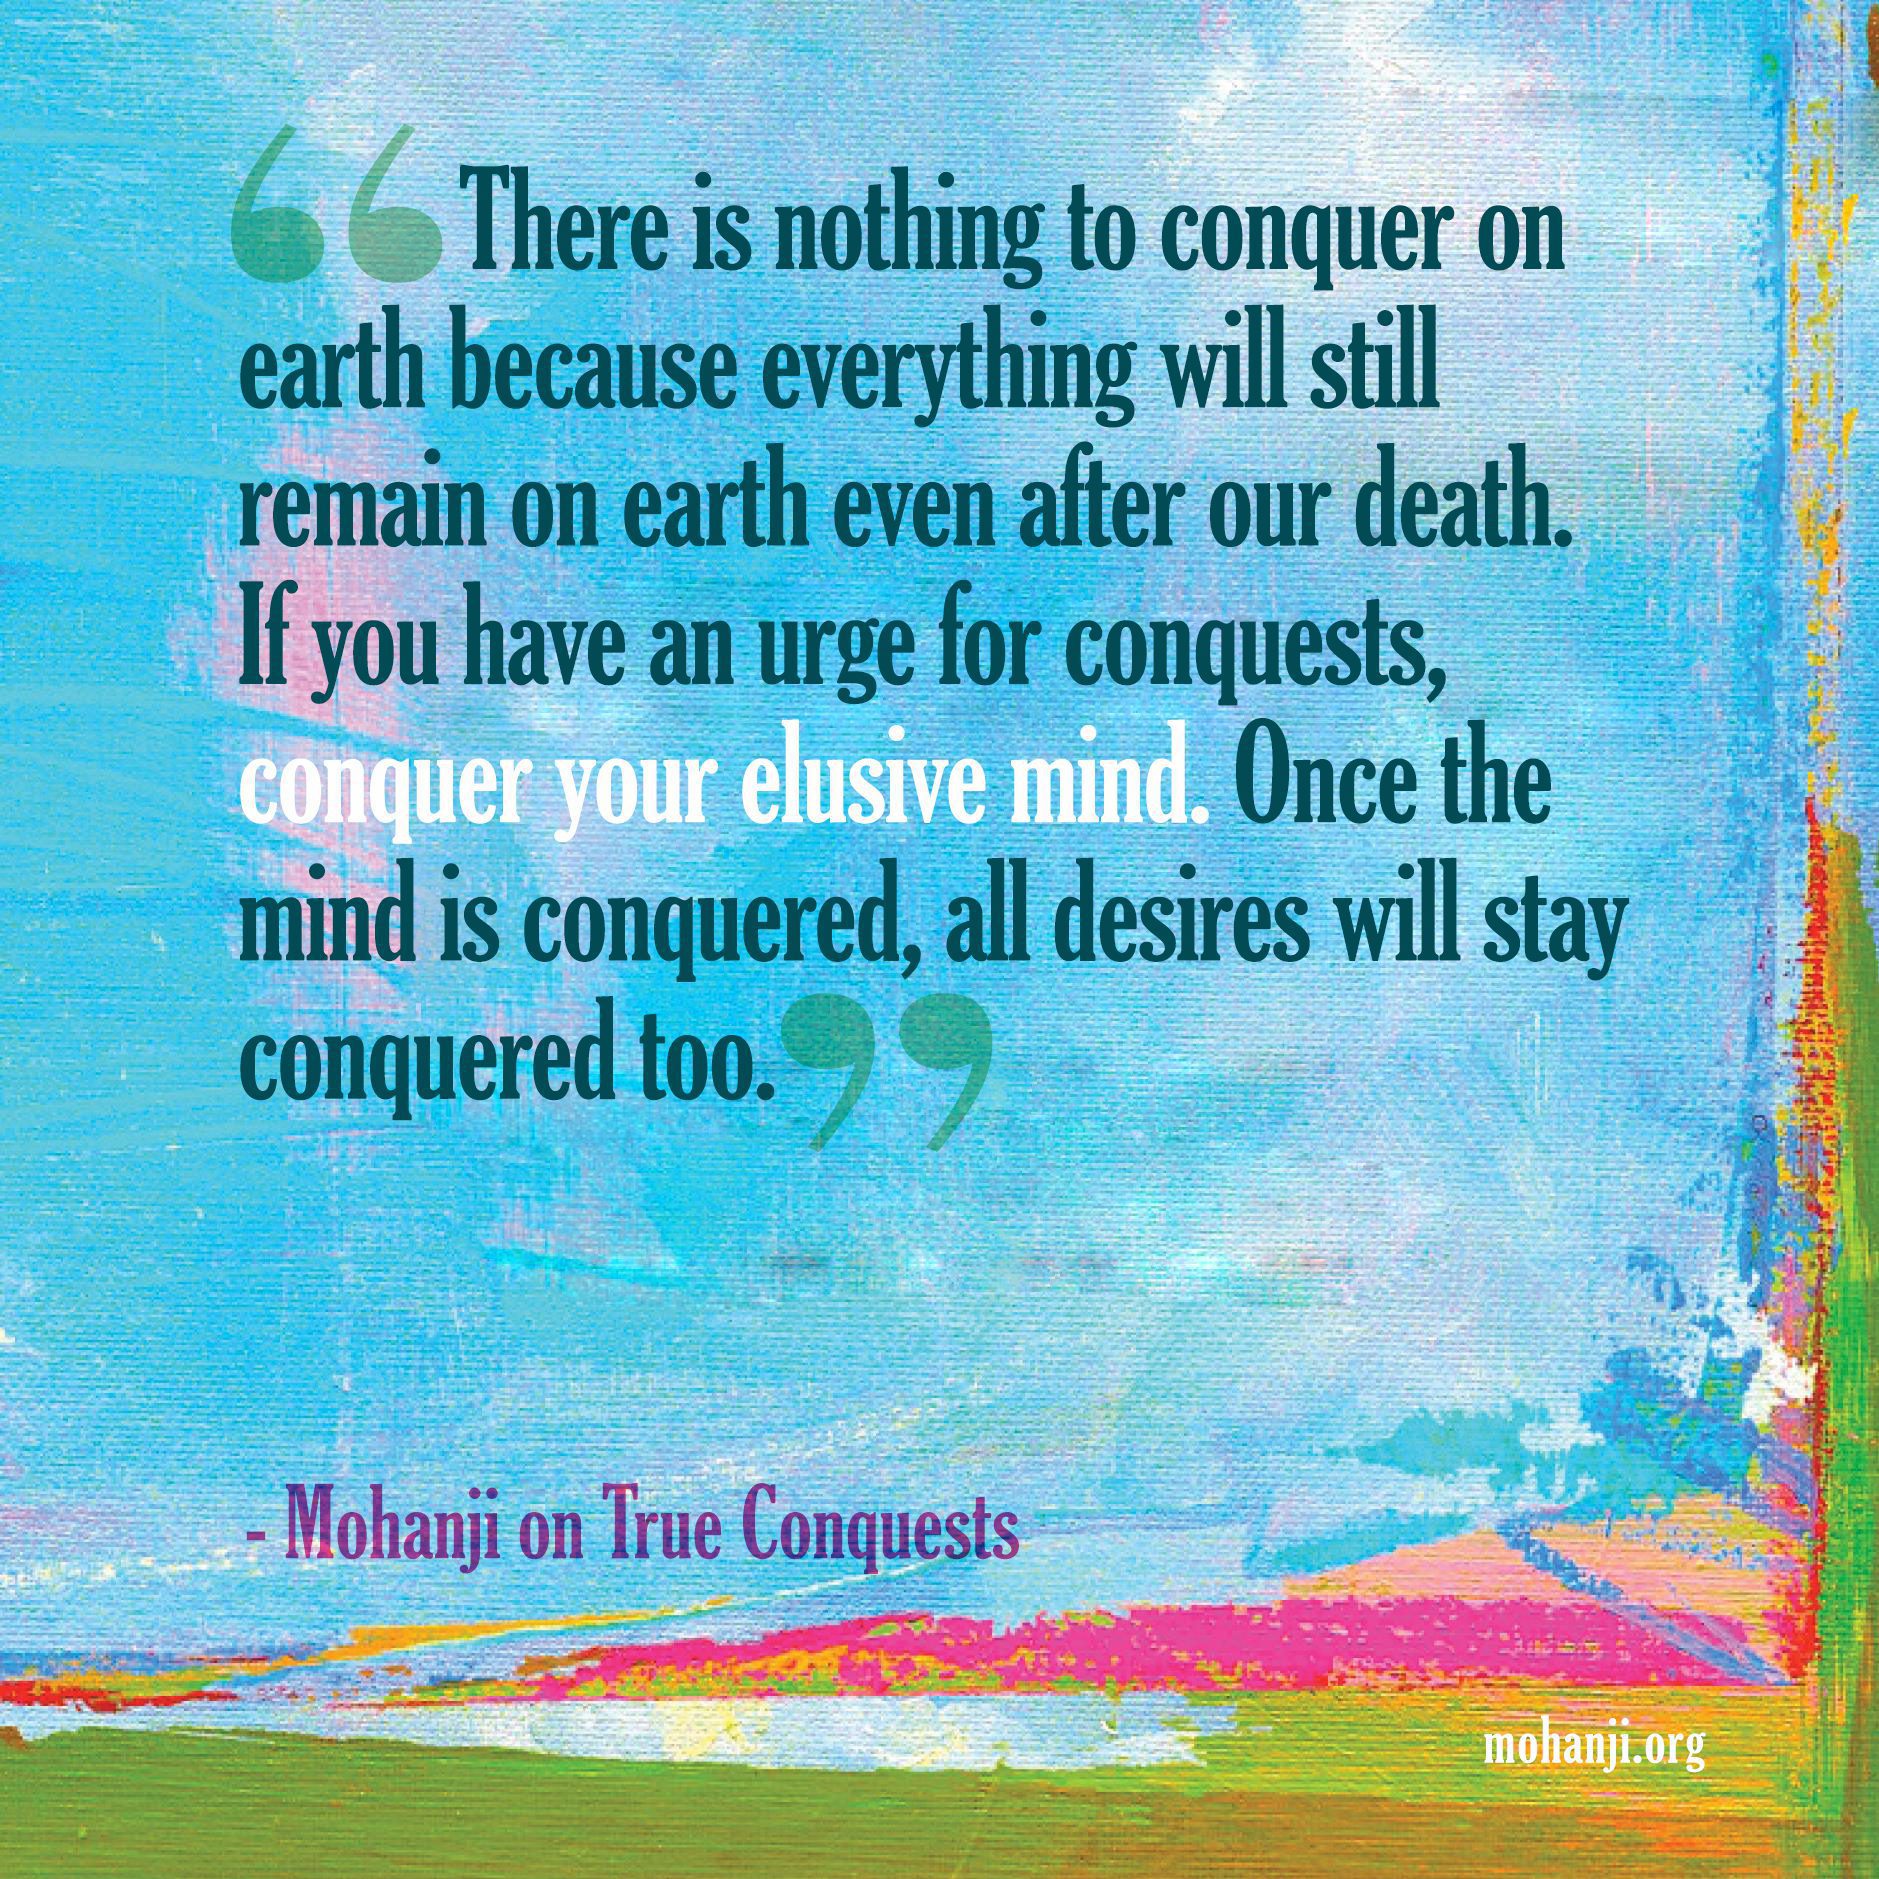 Mohanji quote - True conquests